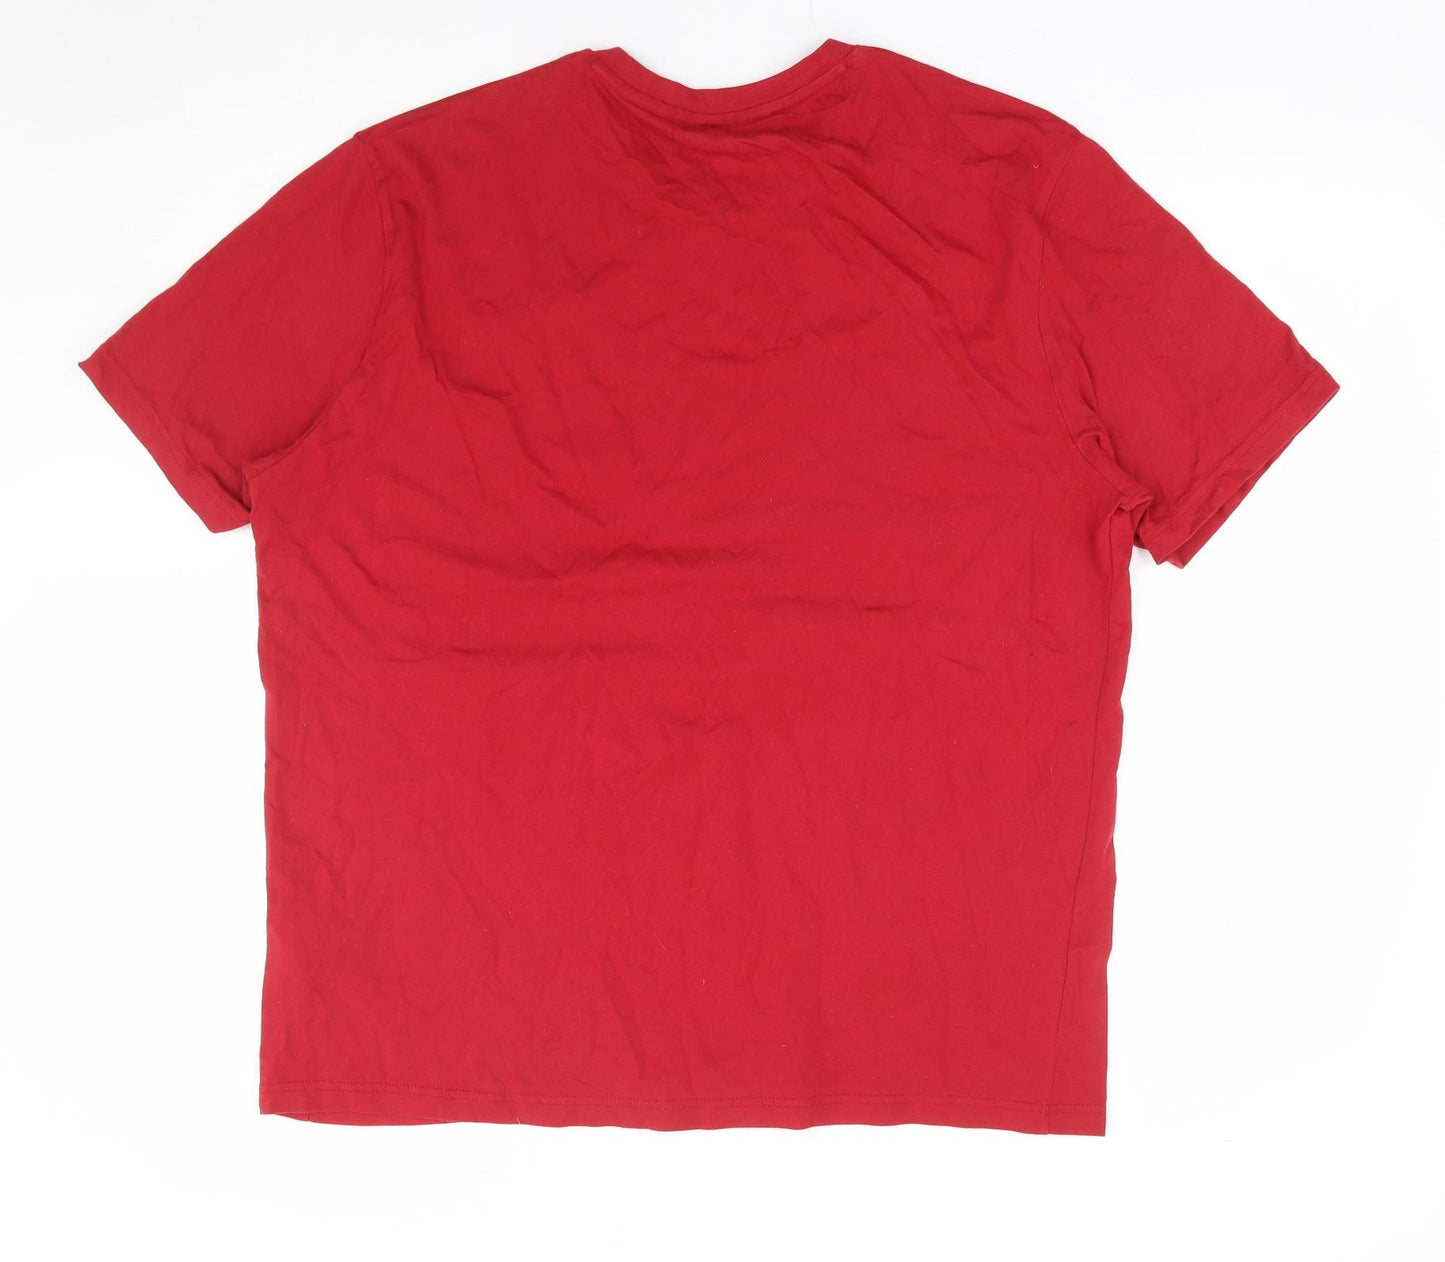 Jeff & Co Mens Red Cotton T-Shirt Size L Round Neck - Bird